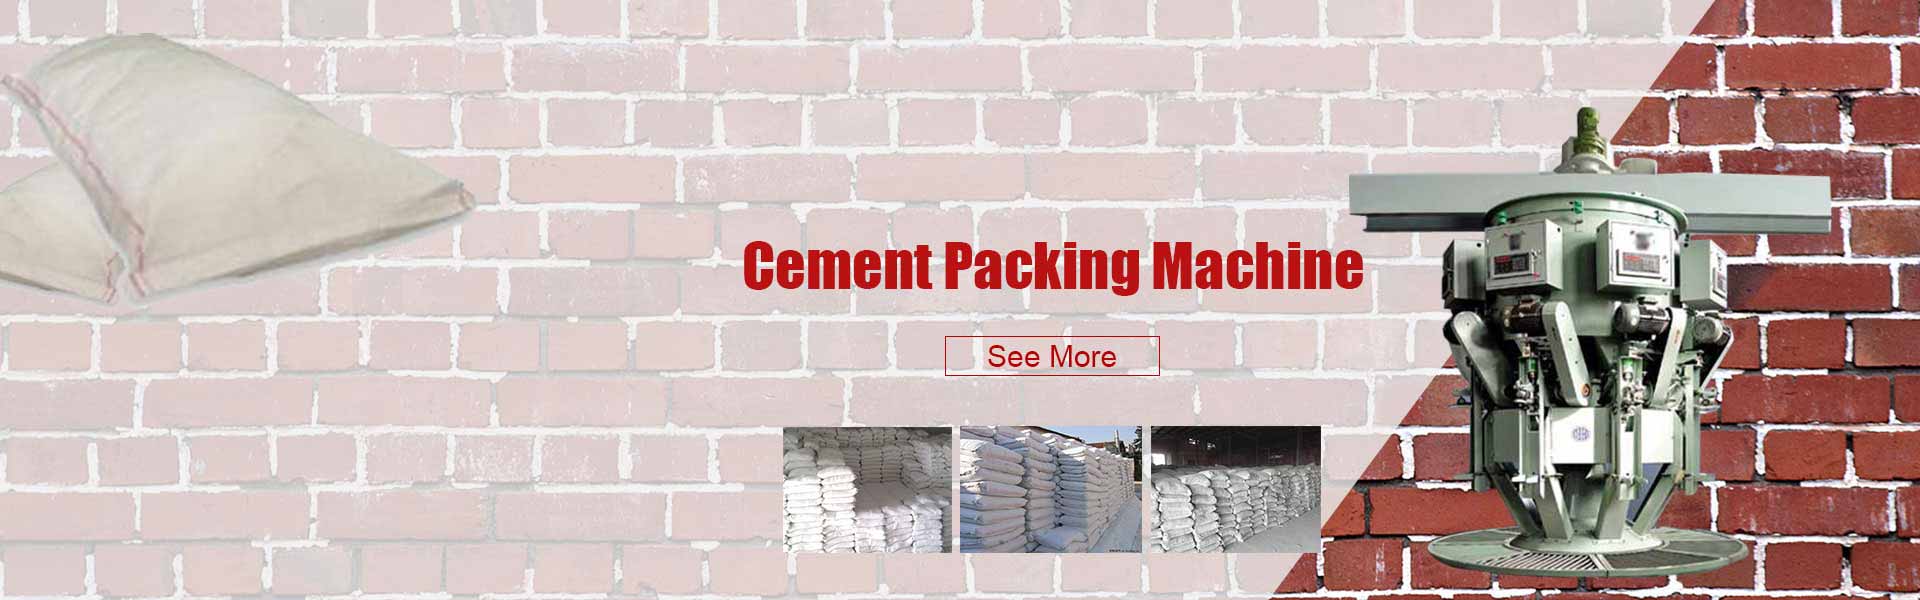 Cement Packing Machine